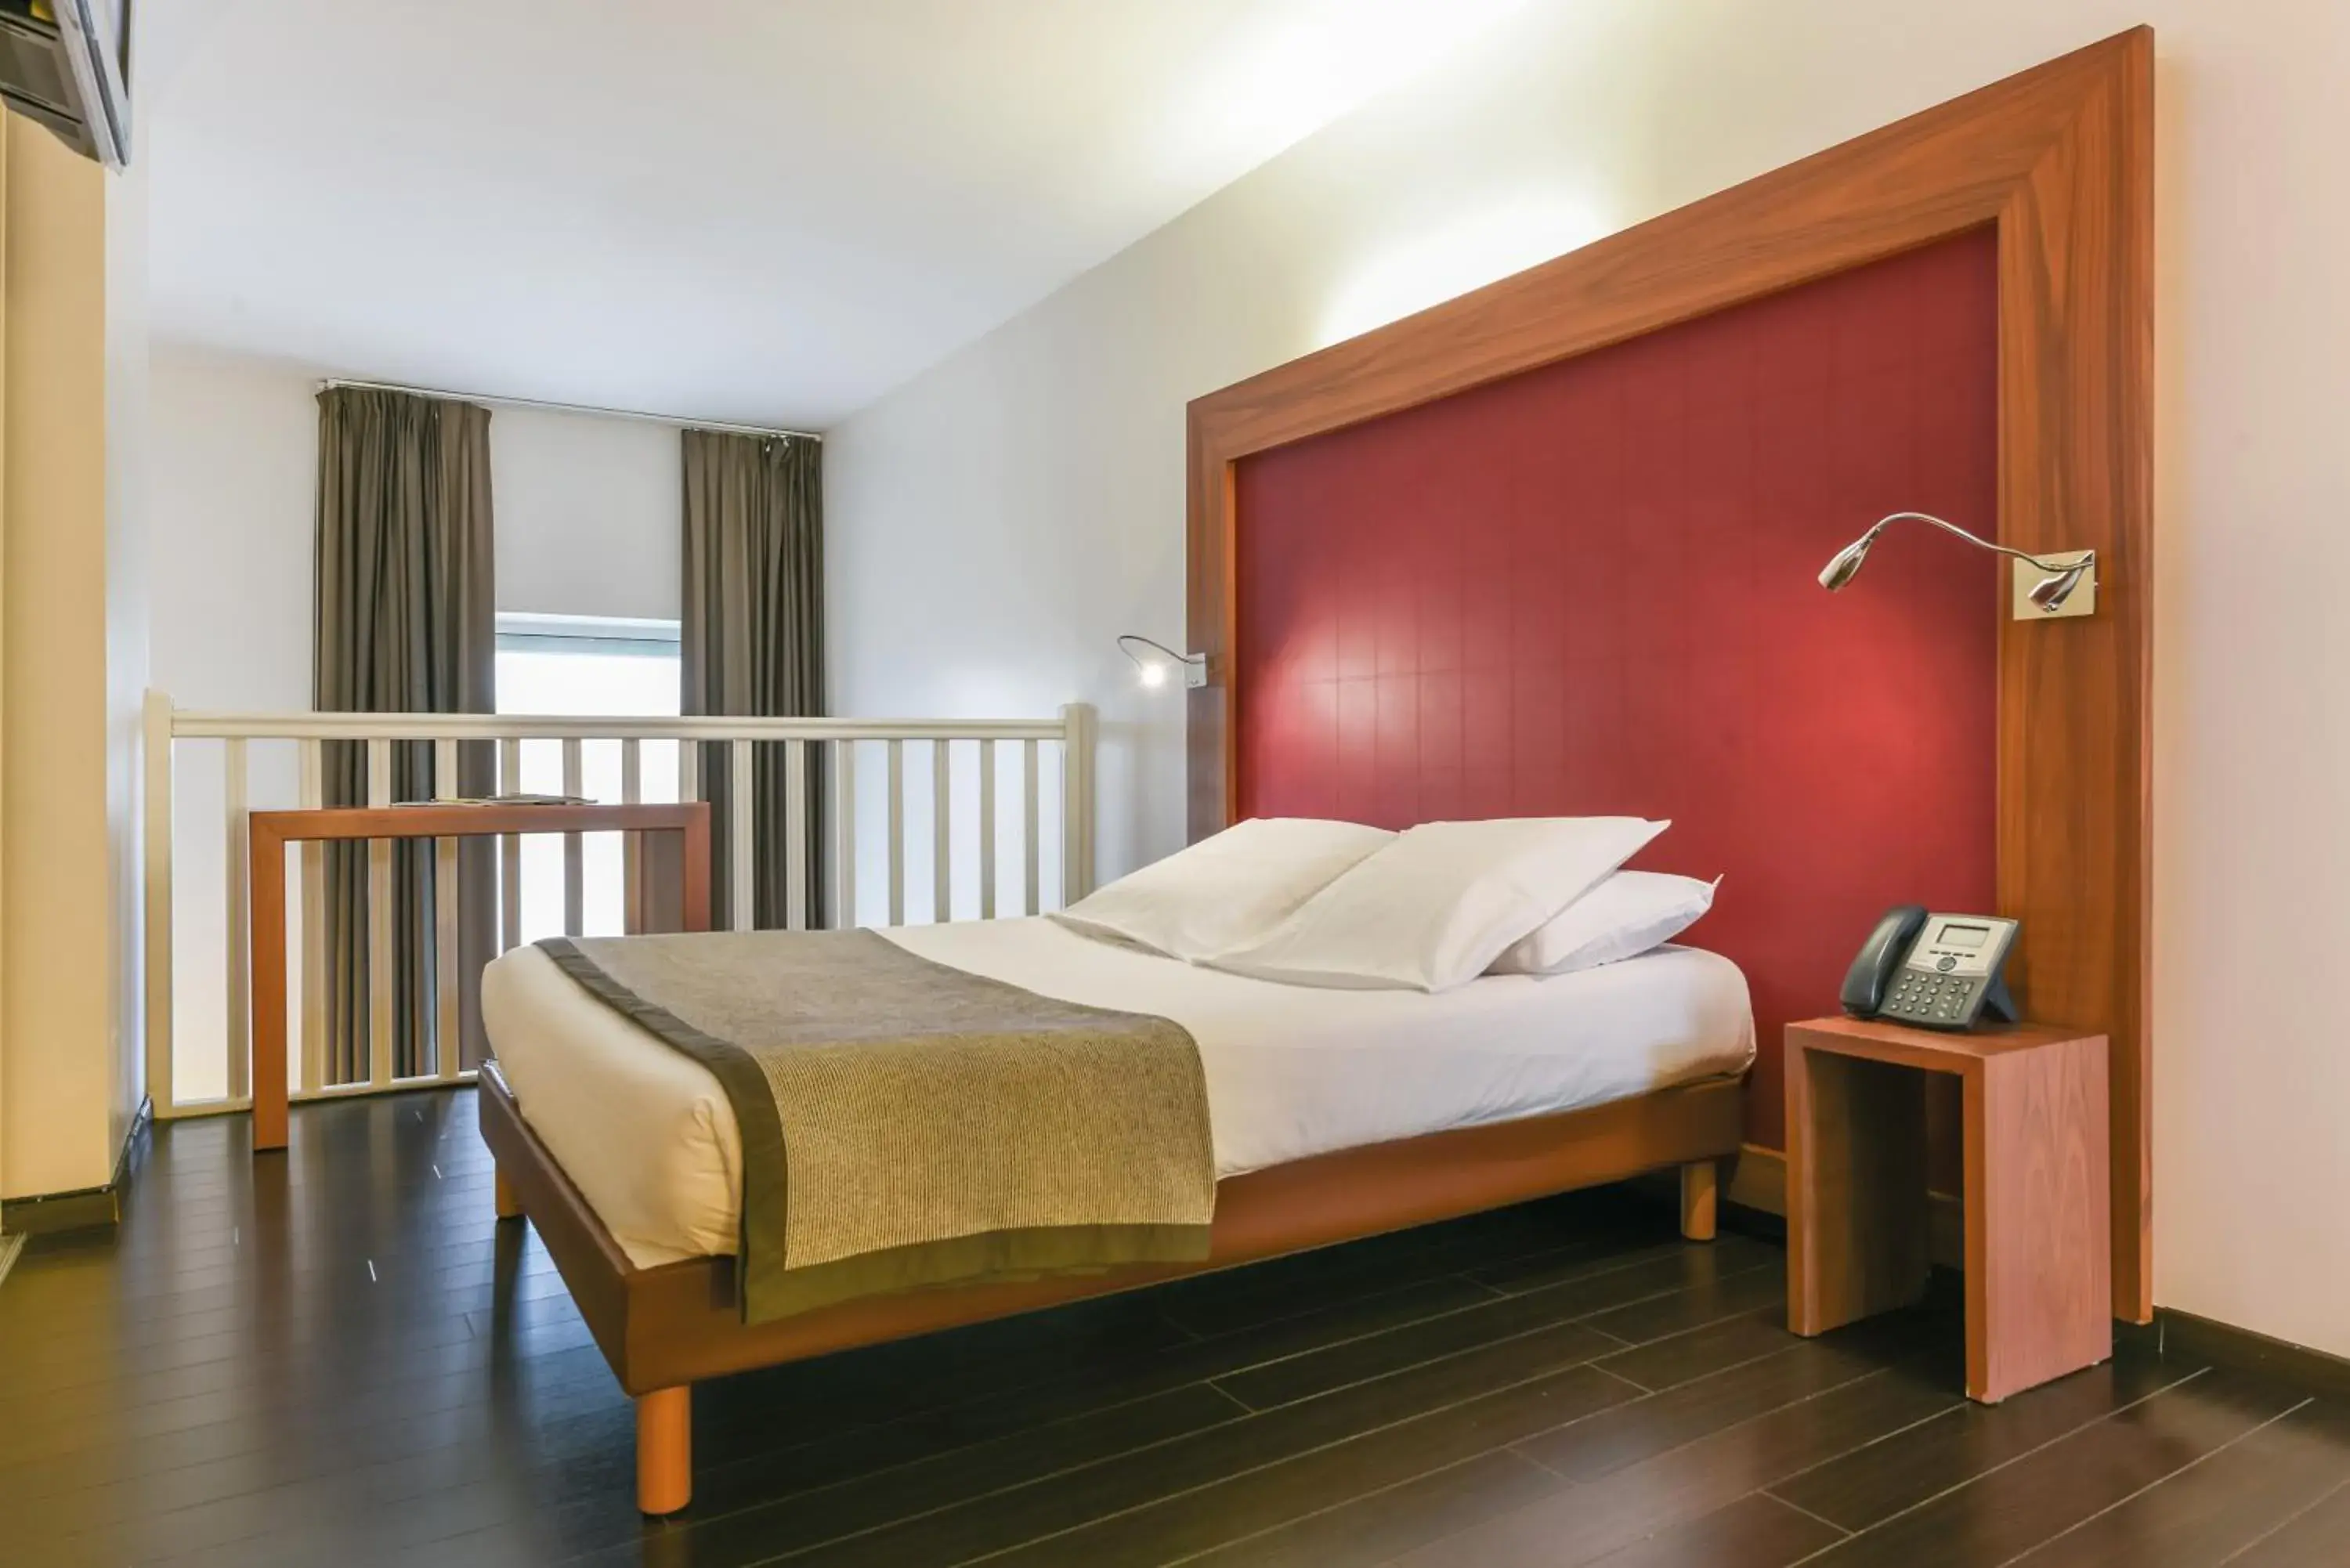 Bed, Room Photo in Park & Suites Prestige Paris Grande Bibliotheque